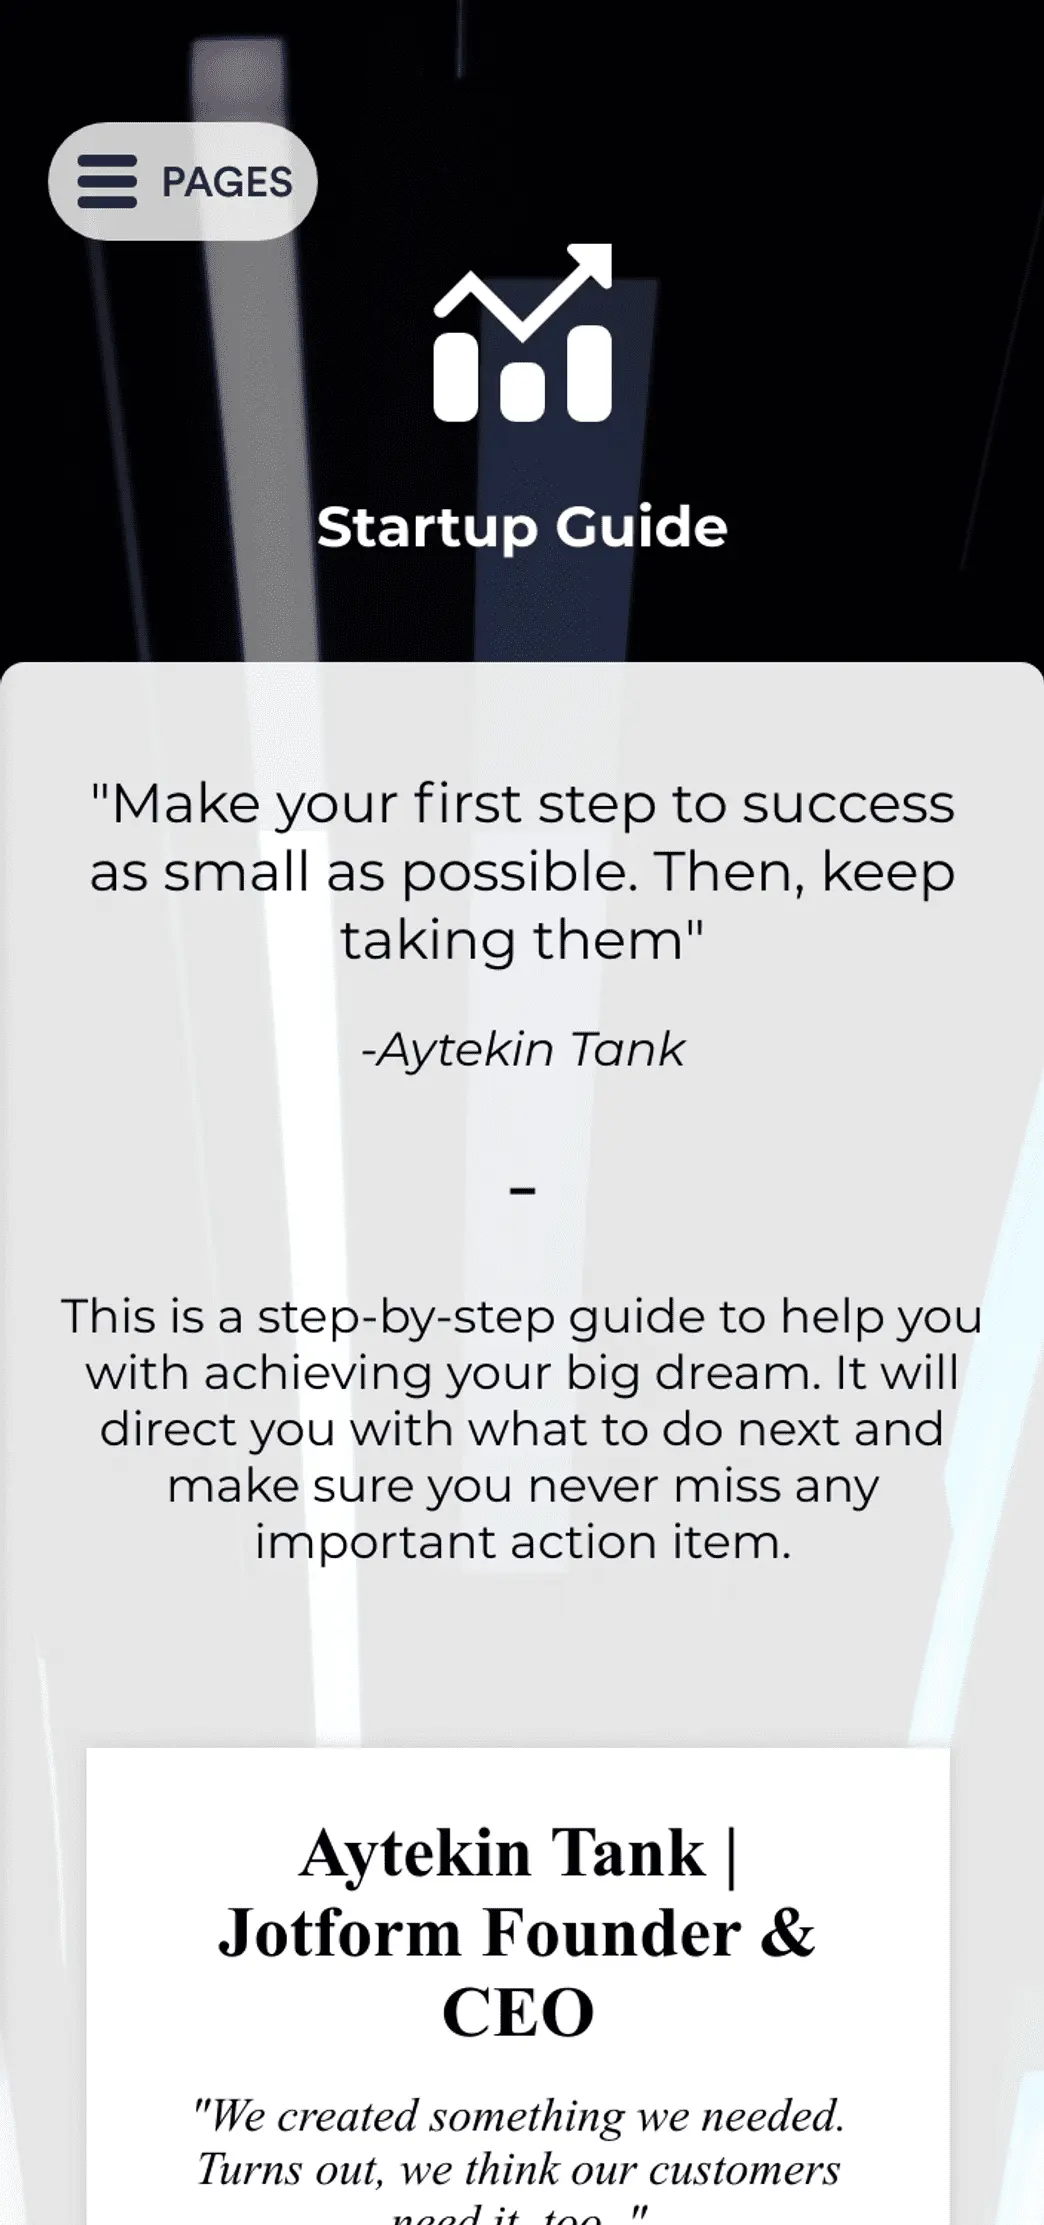 Startup Guide App